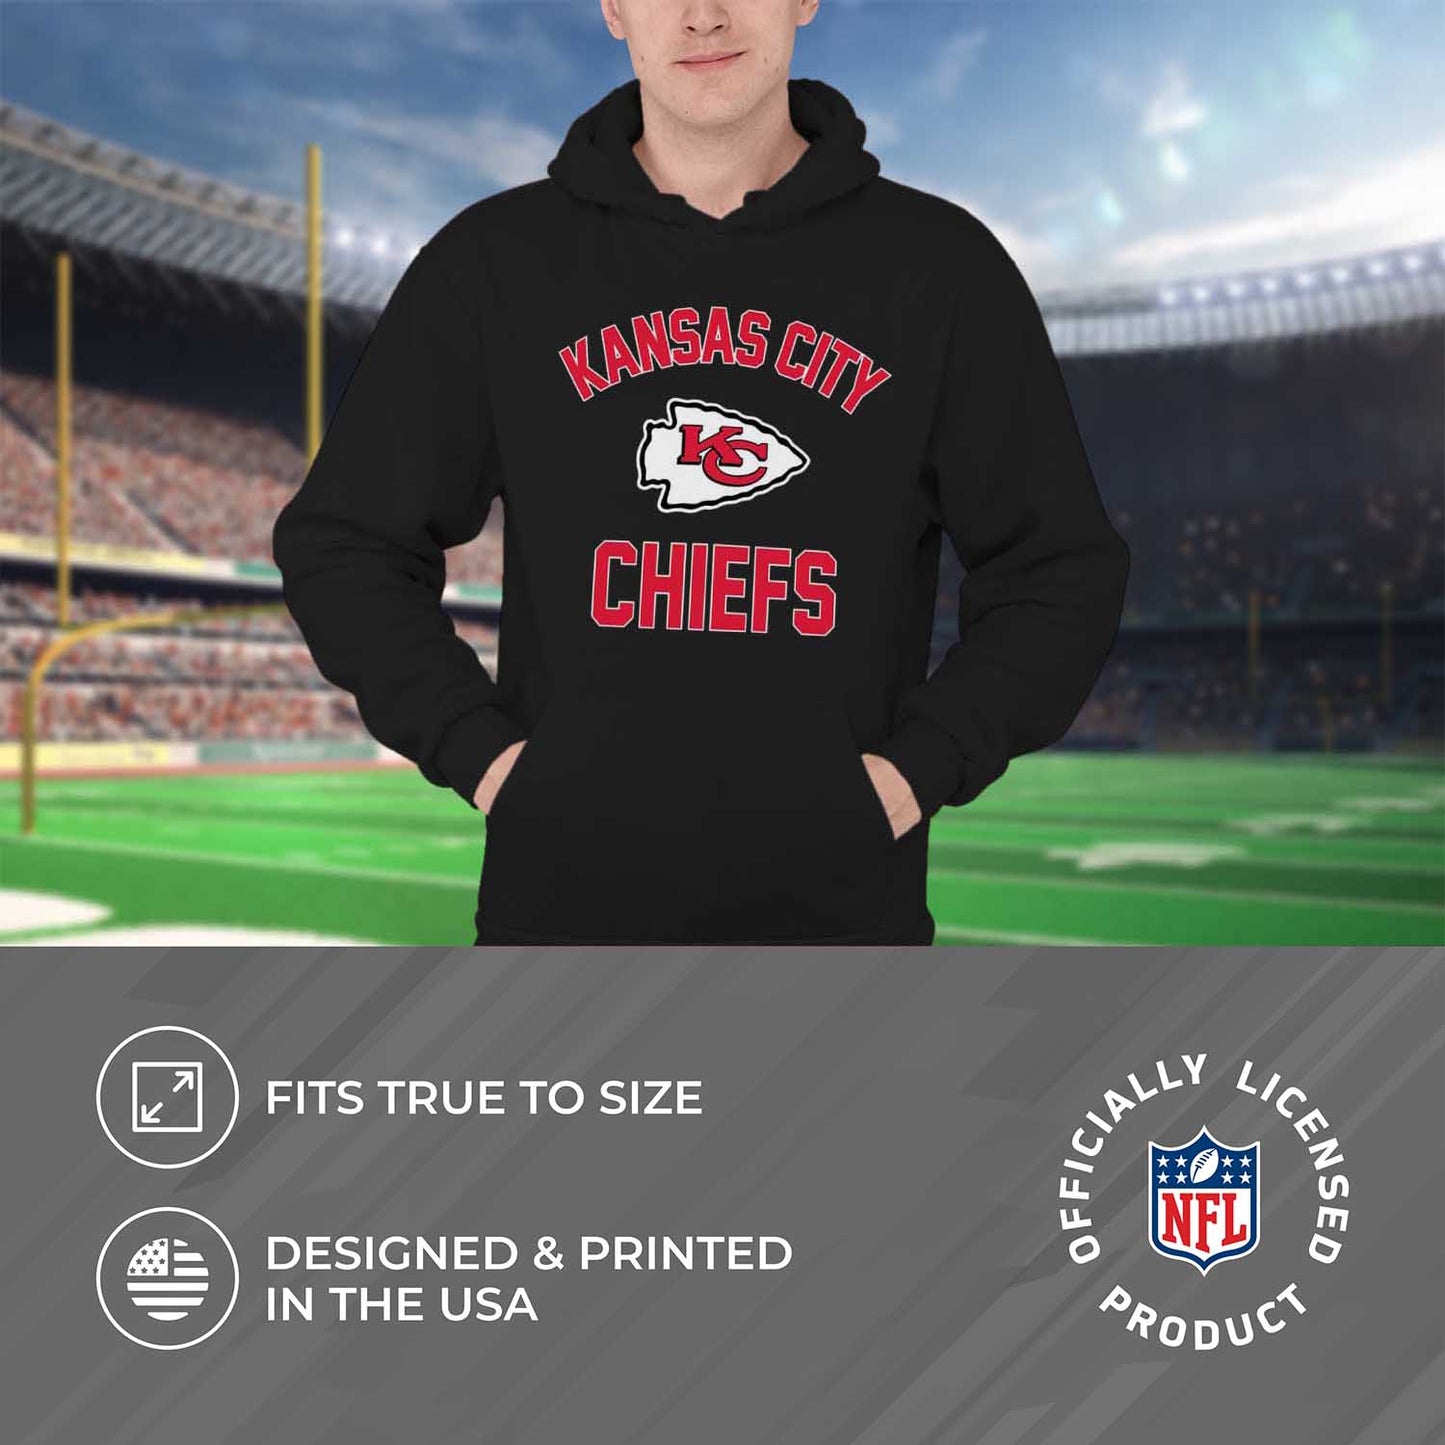 Kansas City Chiefs NFL Adult Gameday Hooded Sweatshirt - Black